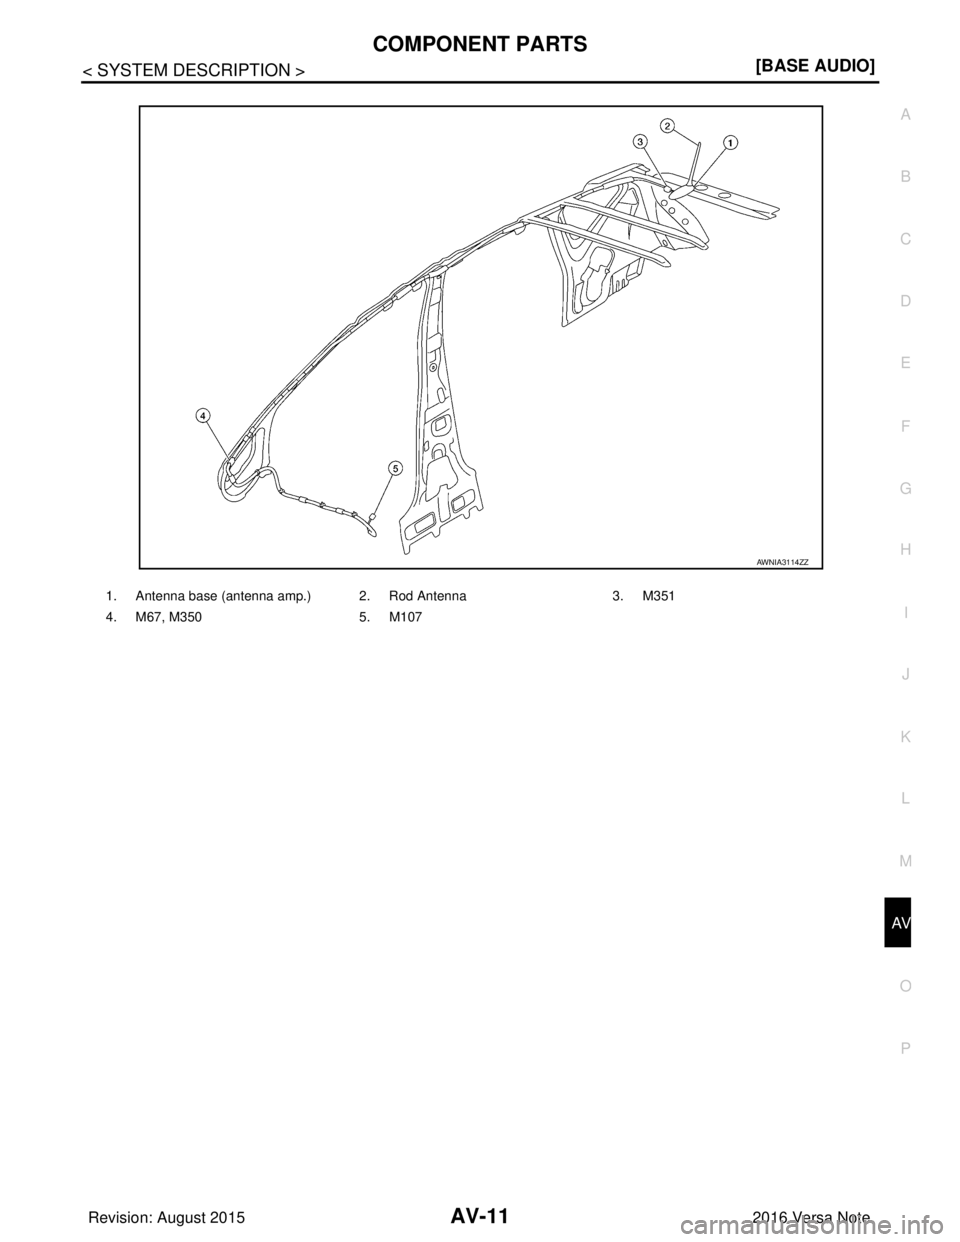 NISSAN NOTE 2016  Service Repair Manual AV
COMPONENT PARTSAV-11
< SYSTEM DESCRIPTION > [BASE AUDIO]
C
D
E
F
G H
I
J
K L
M B A
O P
1. Antenna base (antenna amp.) 2. Rod Antenna 3. M351
4. M67, M350 5. M107
AWNIA3114ZZ
Revision: August 2015 2